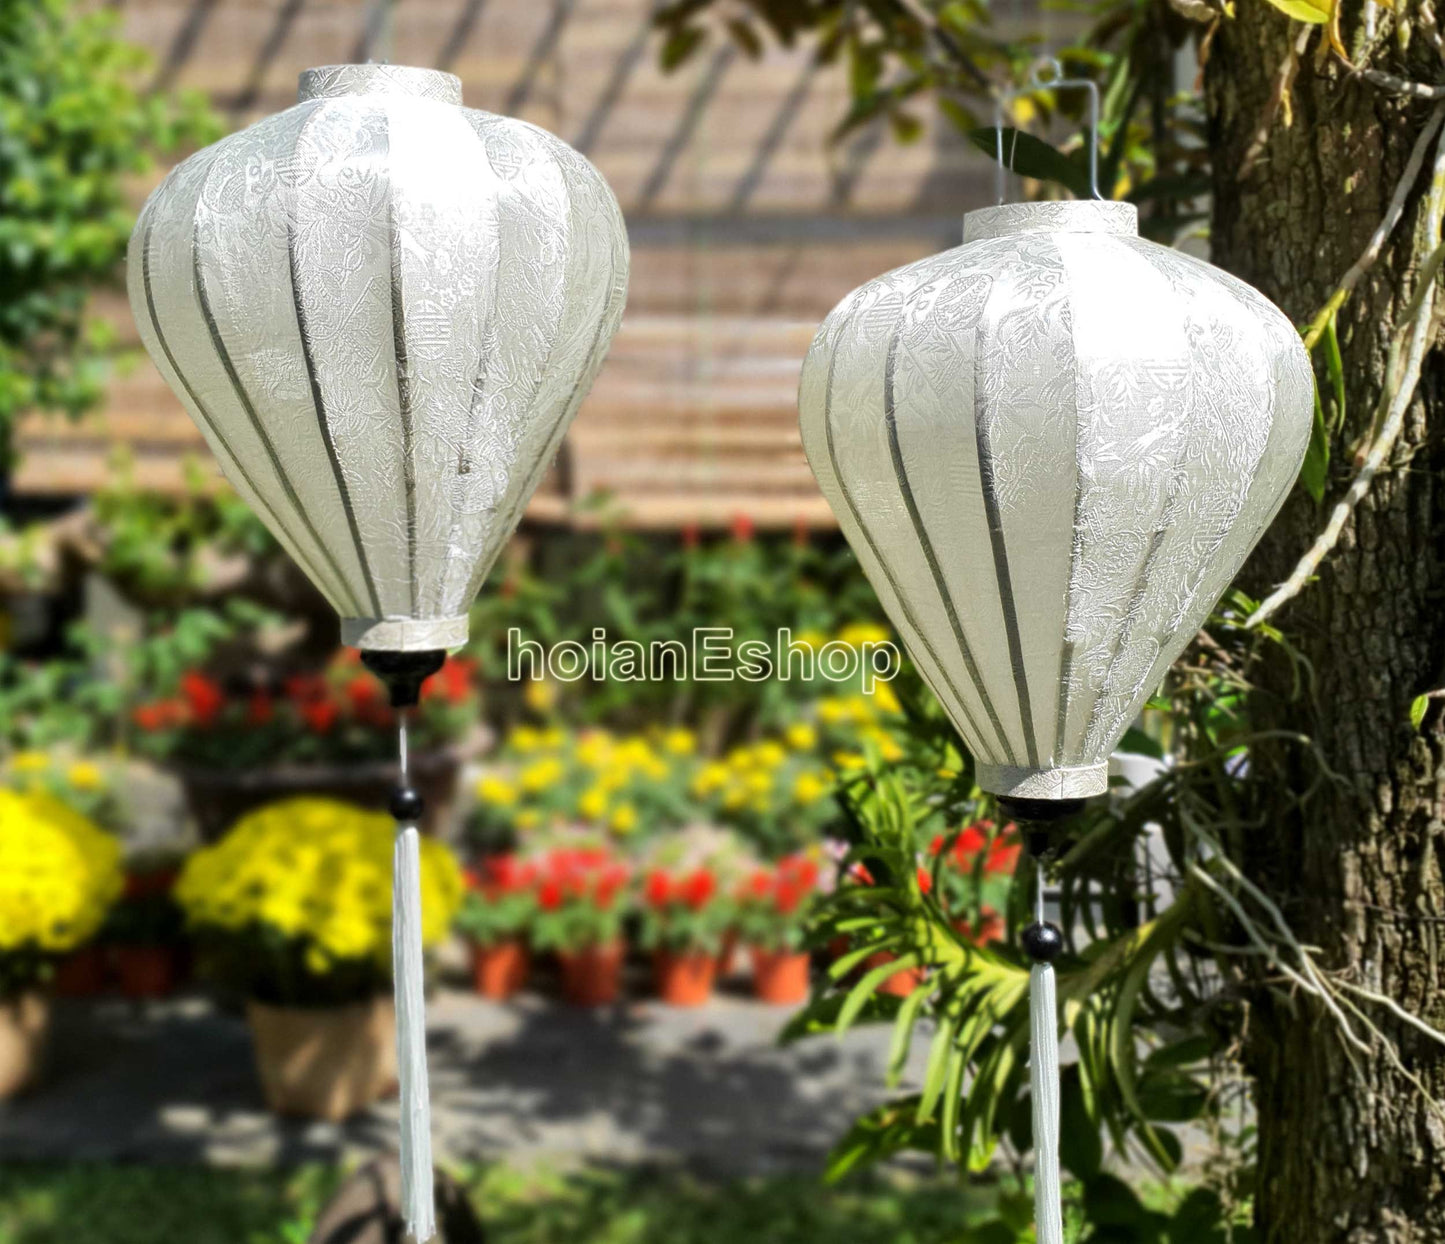 White Silk Lanterns For Ceiling hanging Ceiling decorations - White lanterns for Reataurant Decor Coffee shop decor - Set 20 PCS - Size 55cm